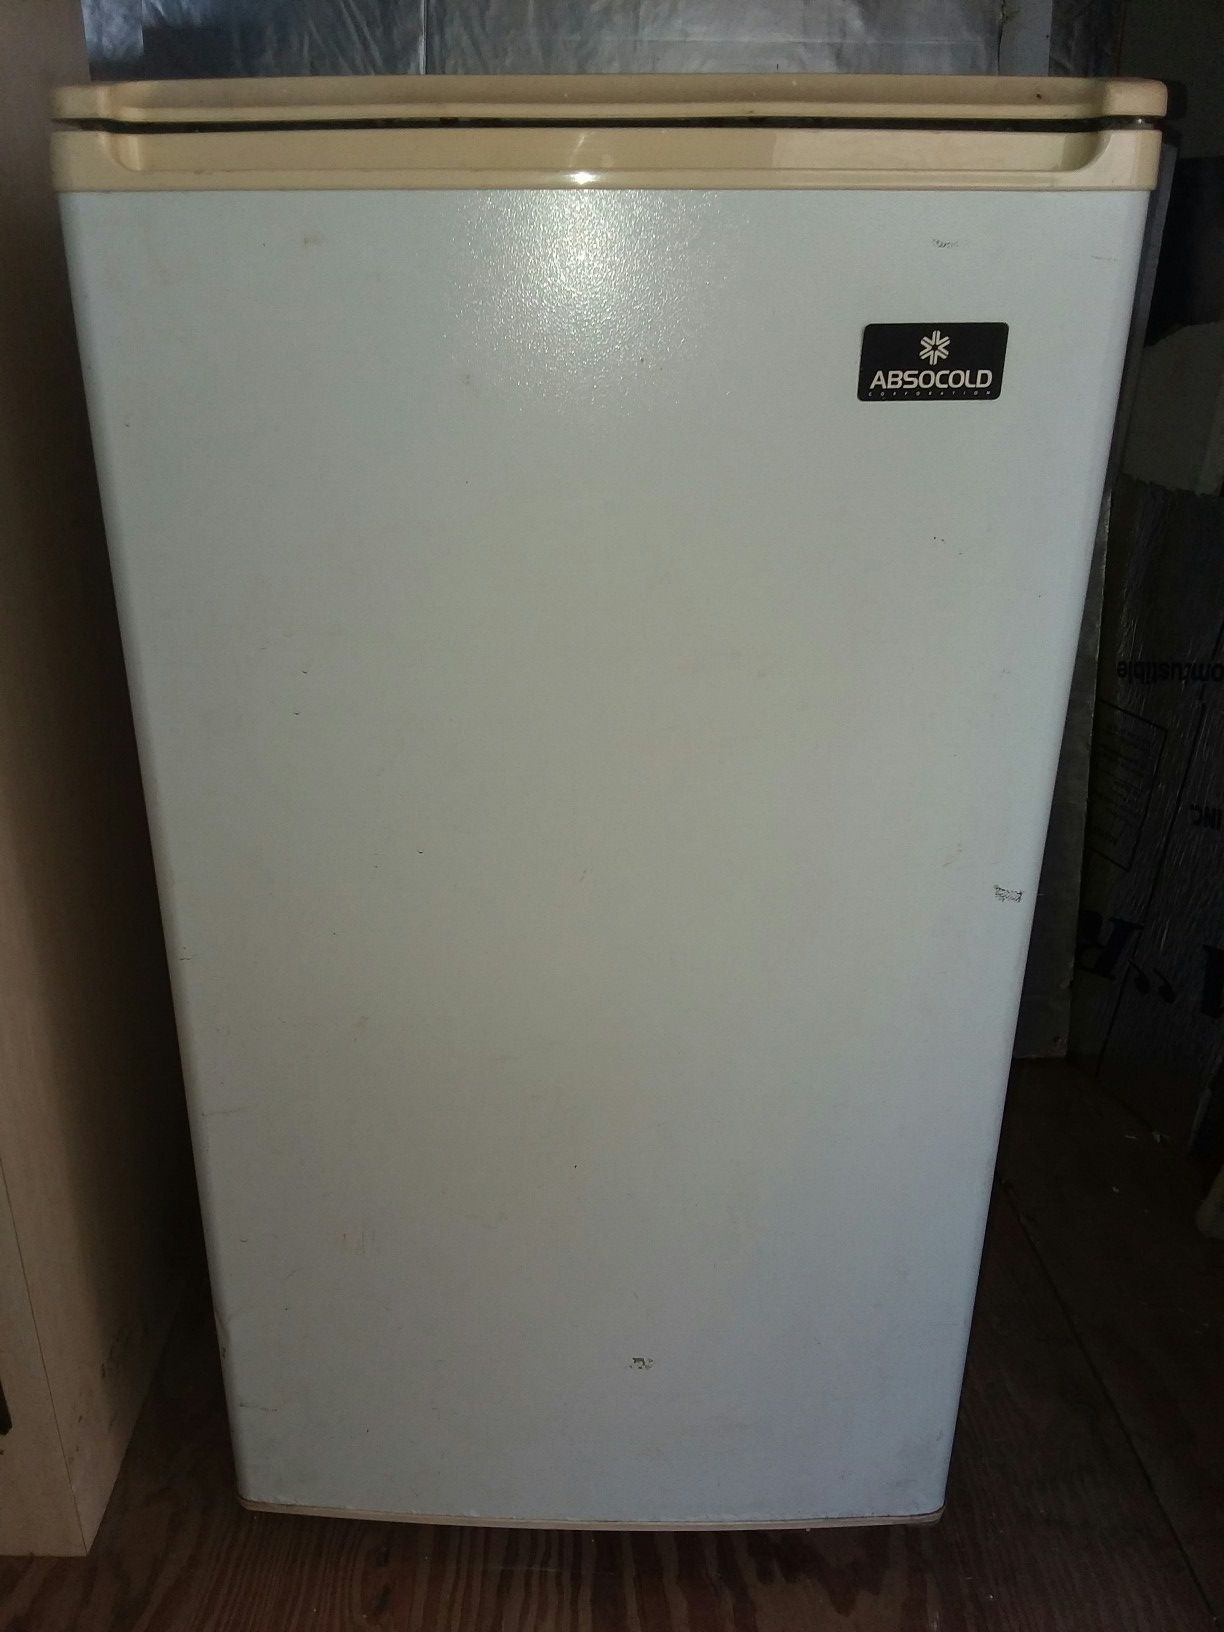 Refrigerator small apartment size